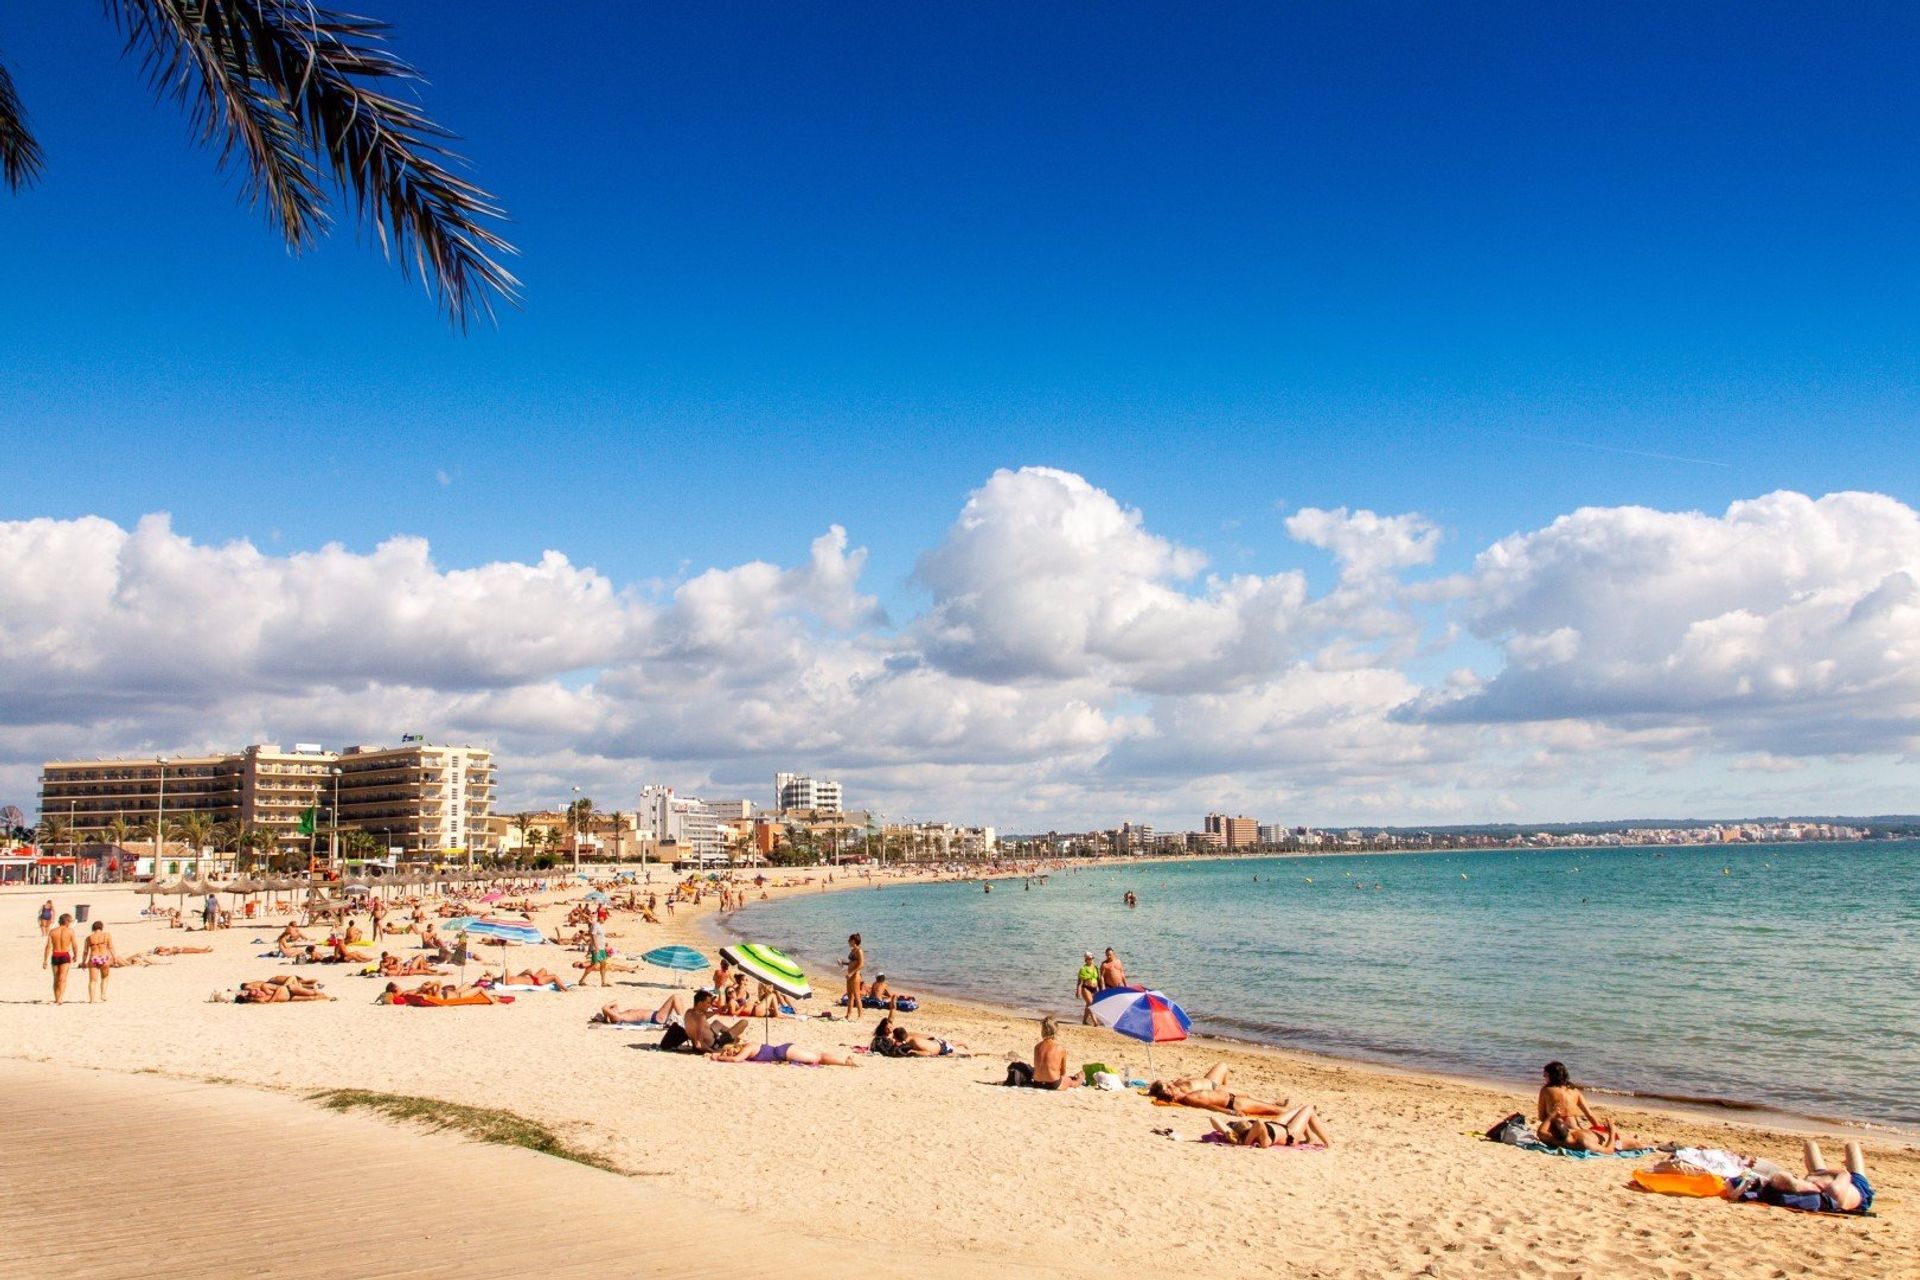 The golden sand of Playa de Palma, close to the city centre